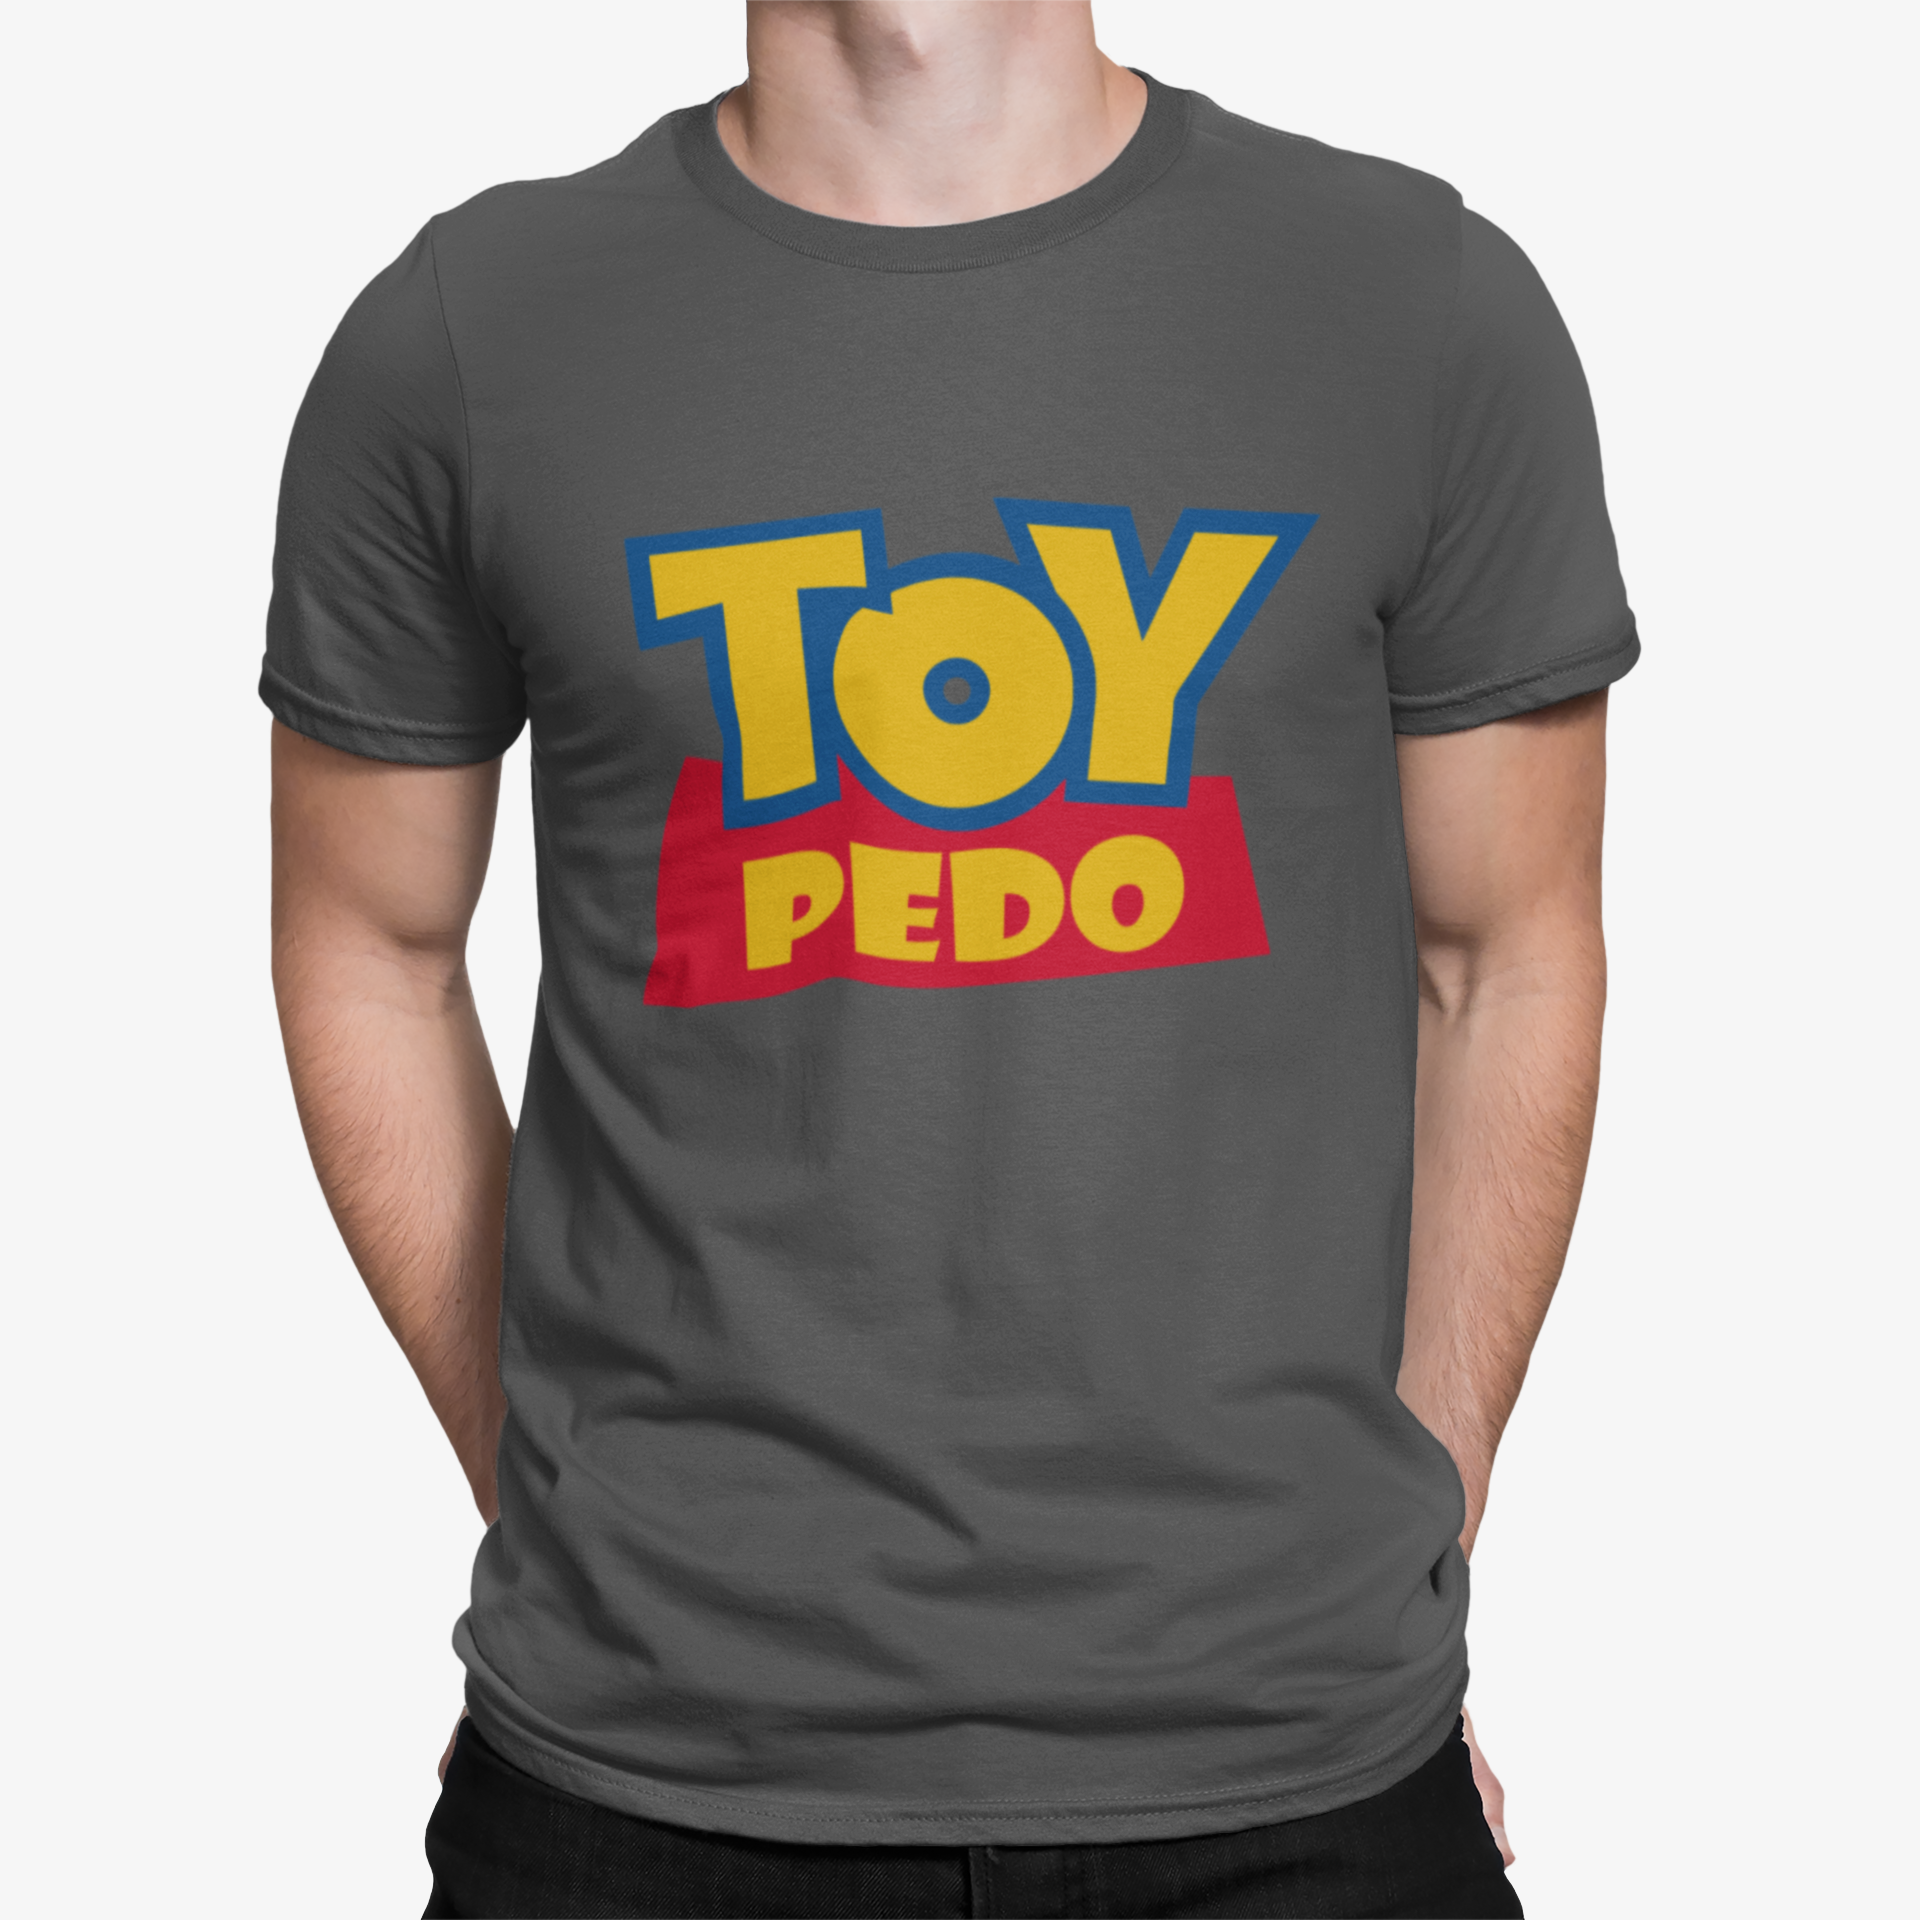 Camiseta Toy Pedo